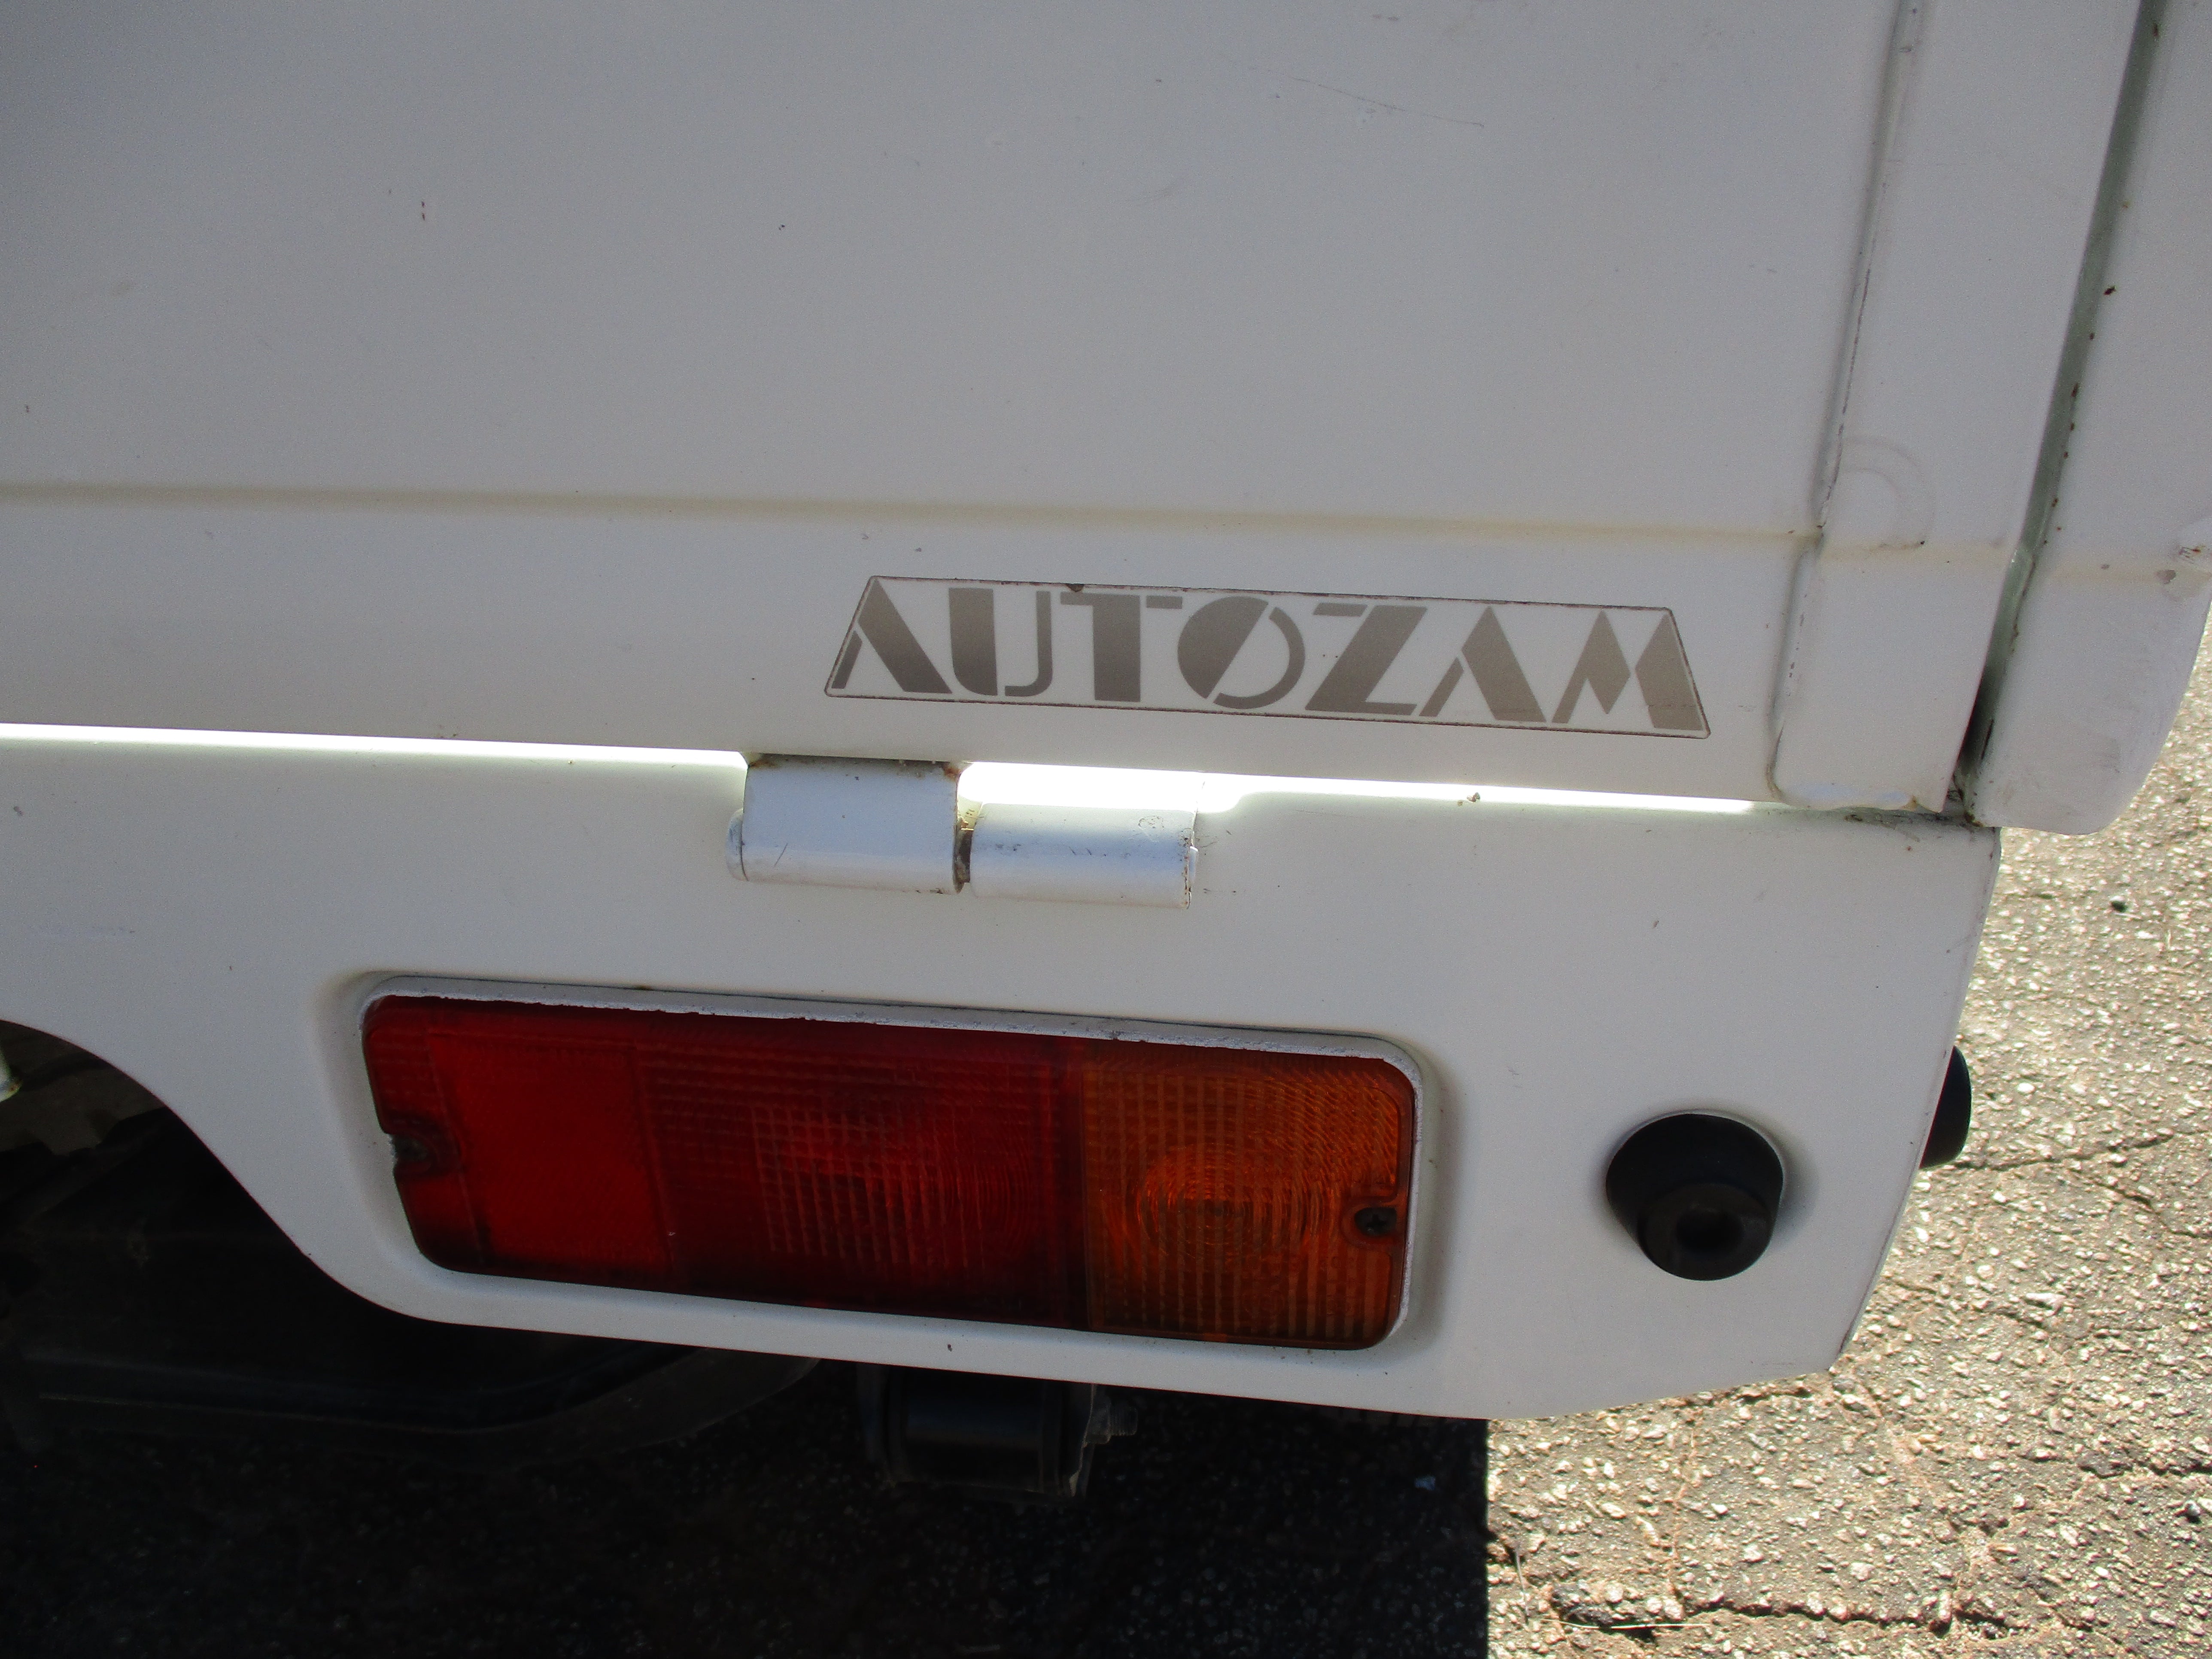 JDM 93 Mazda Autozam Scrum 4WD Mini Truck